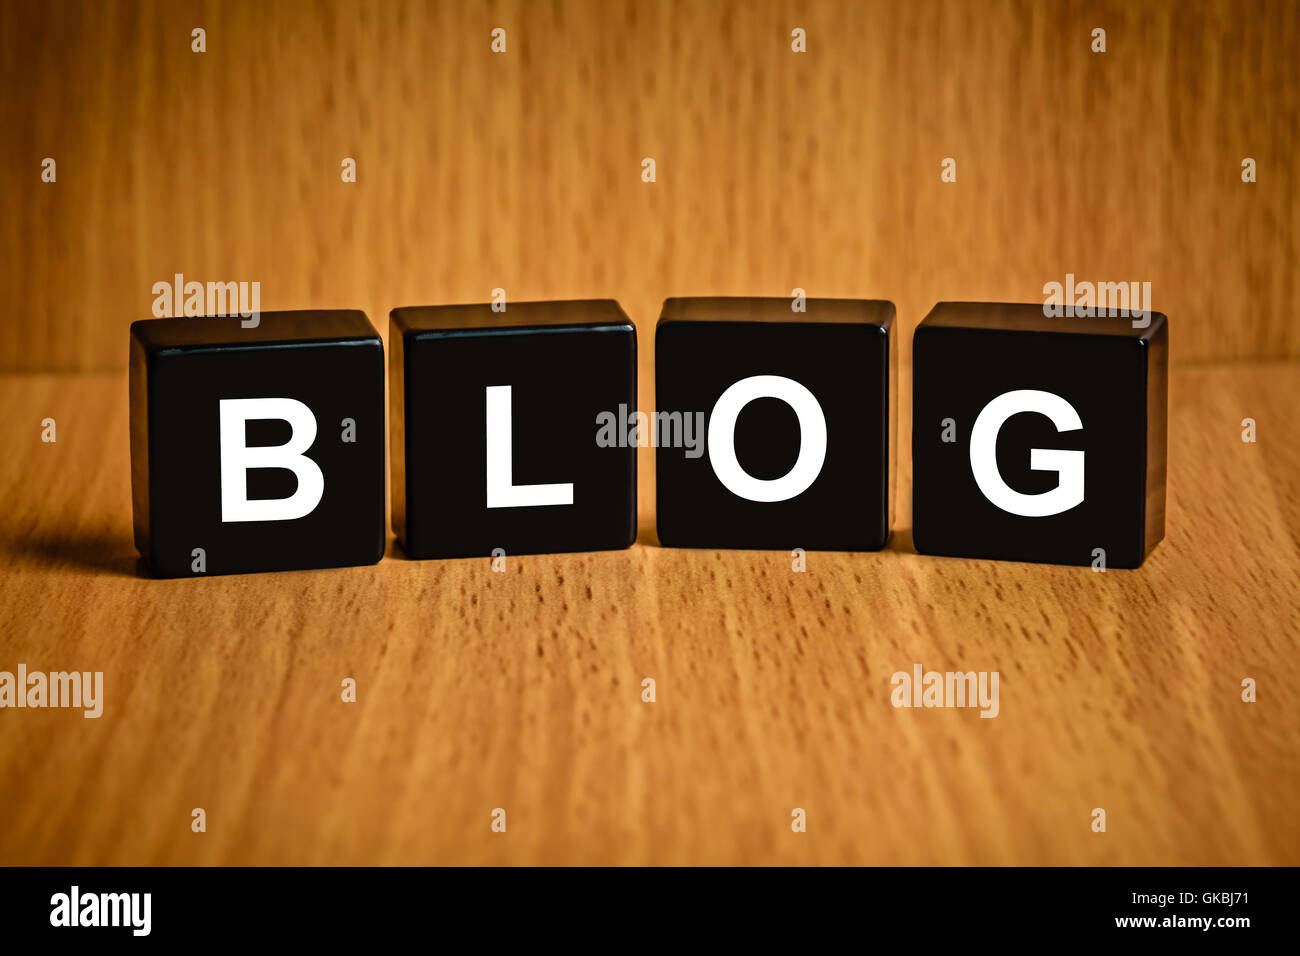 blog text on black block, technology concept Stock Photo